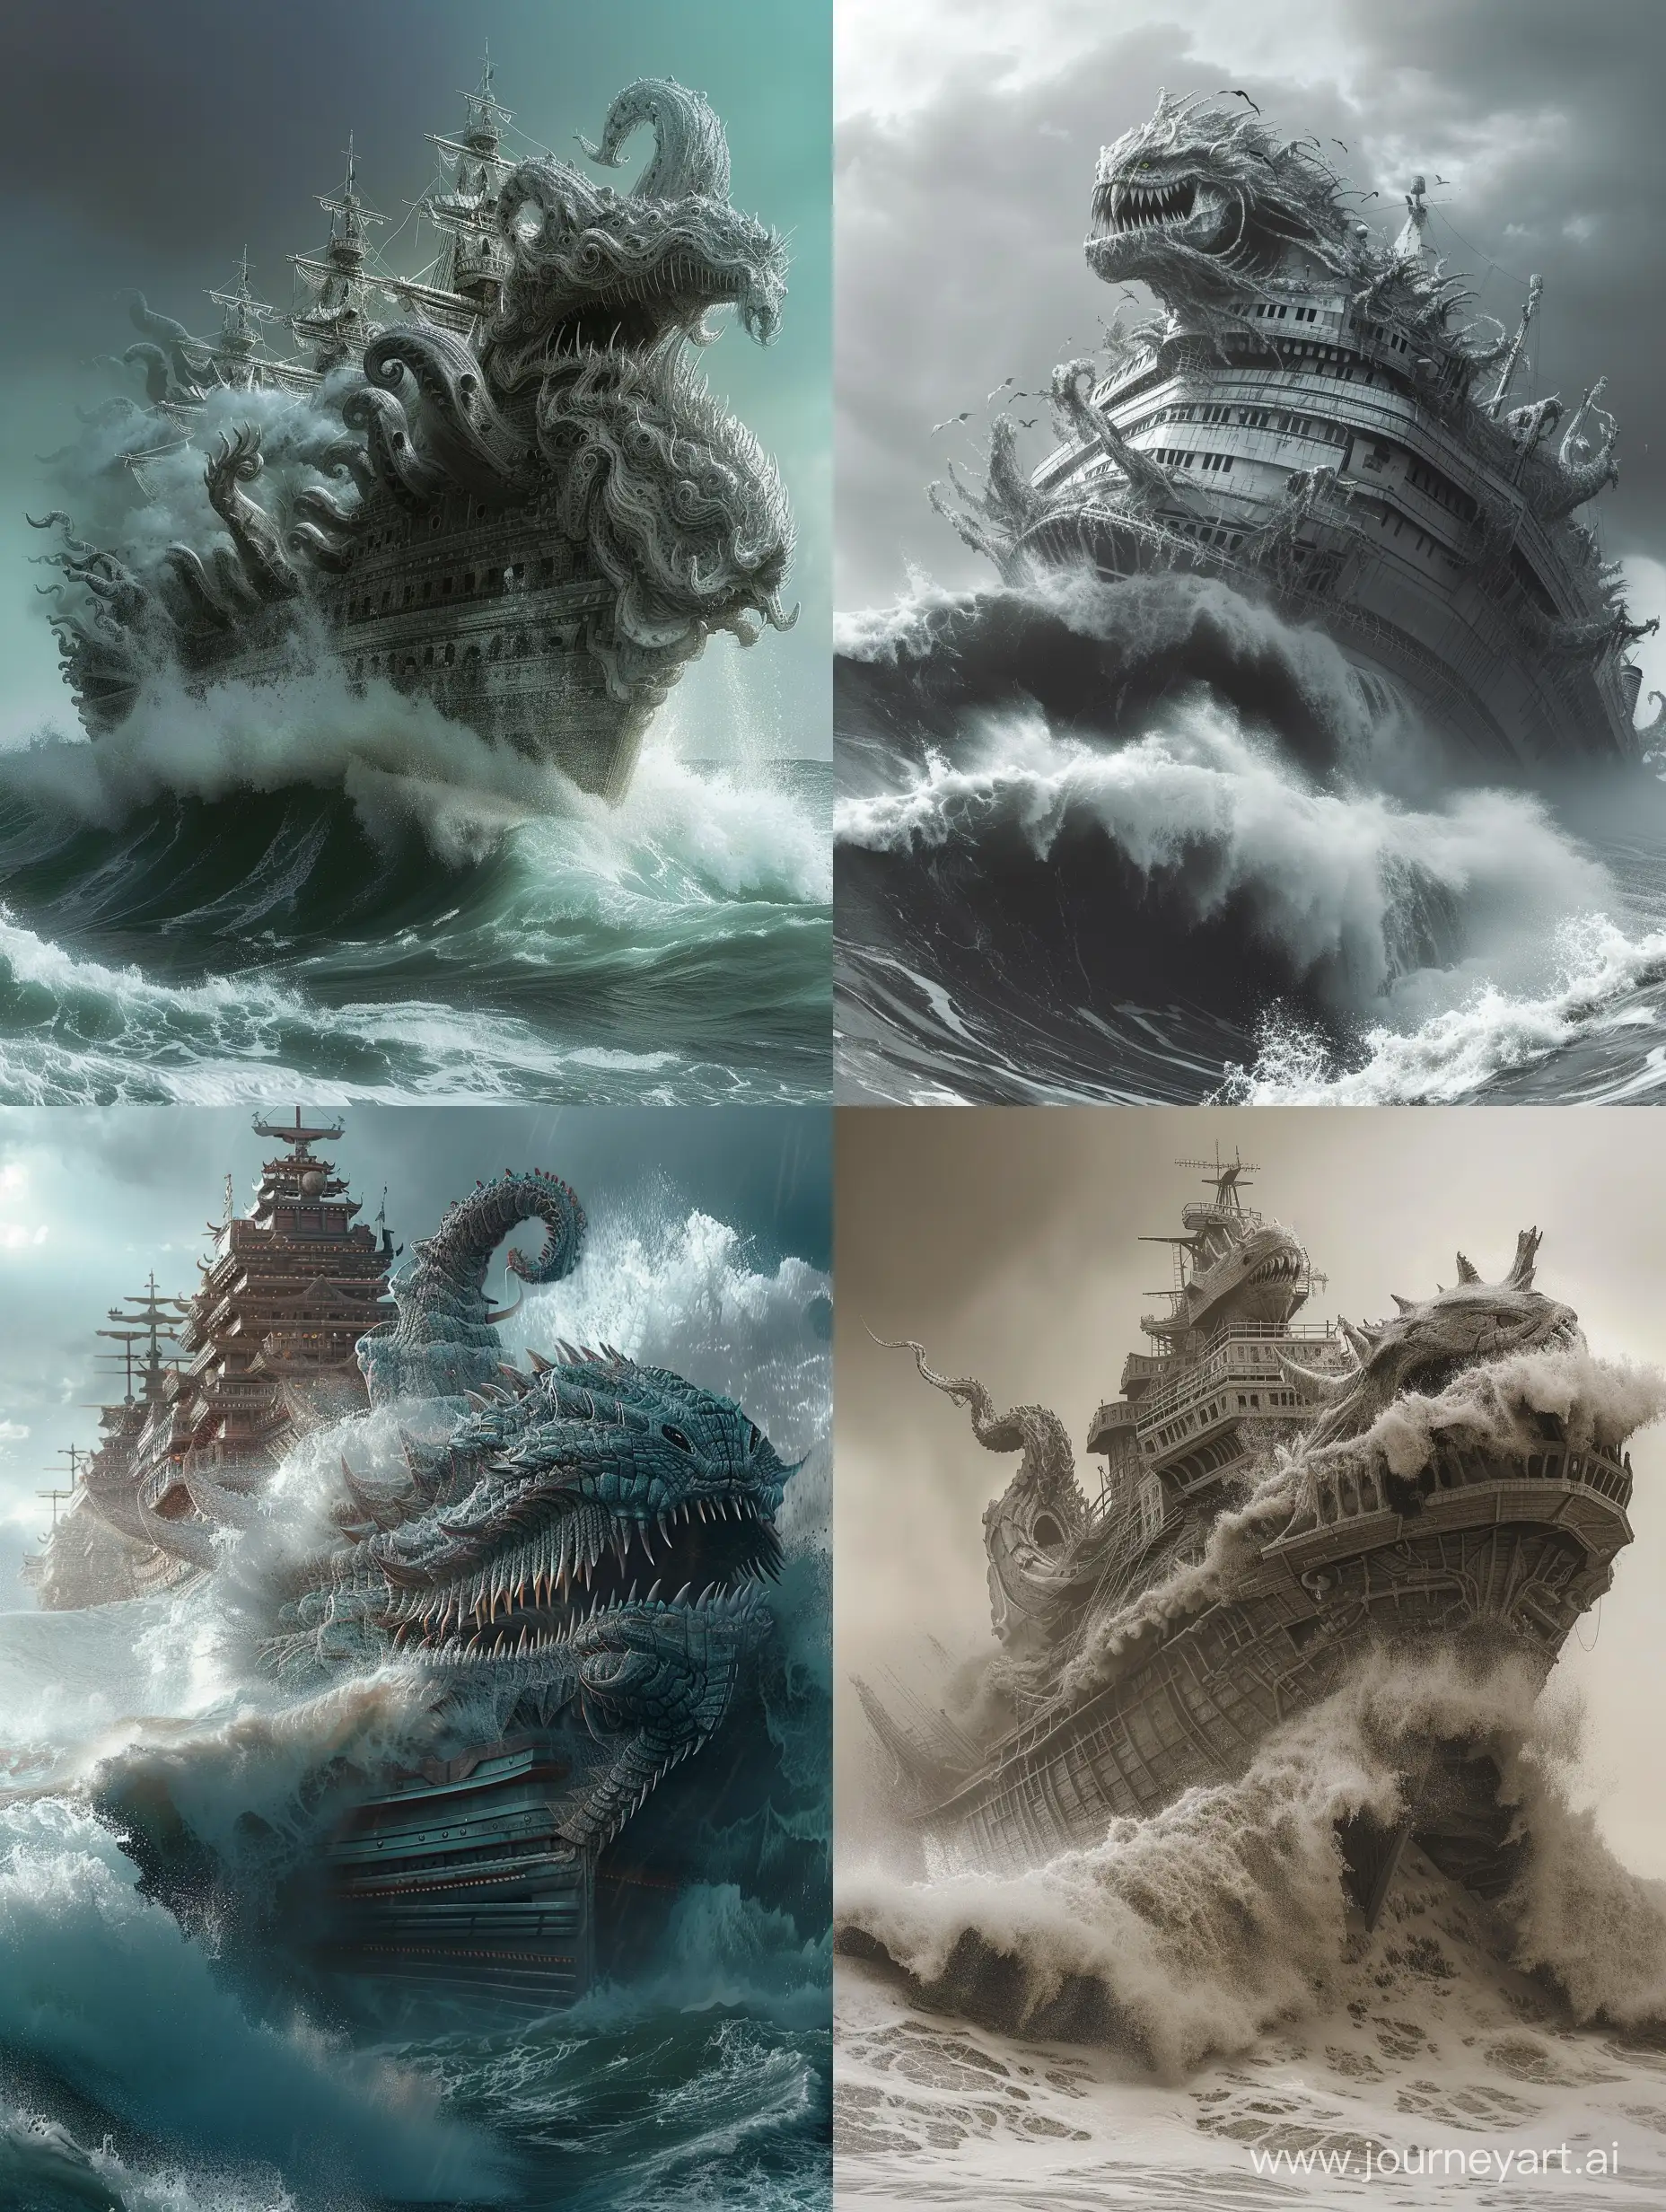 Monstrous-Ship-Battling-Terrifying-Waves-Incredible-Digital-Art-Fantasy